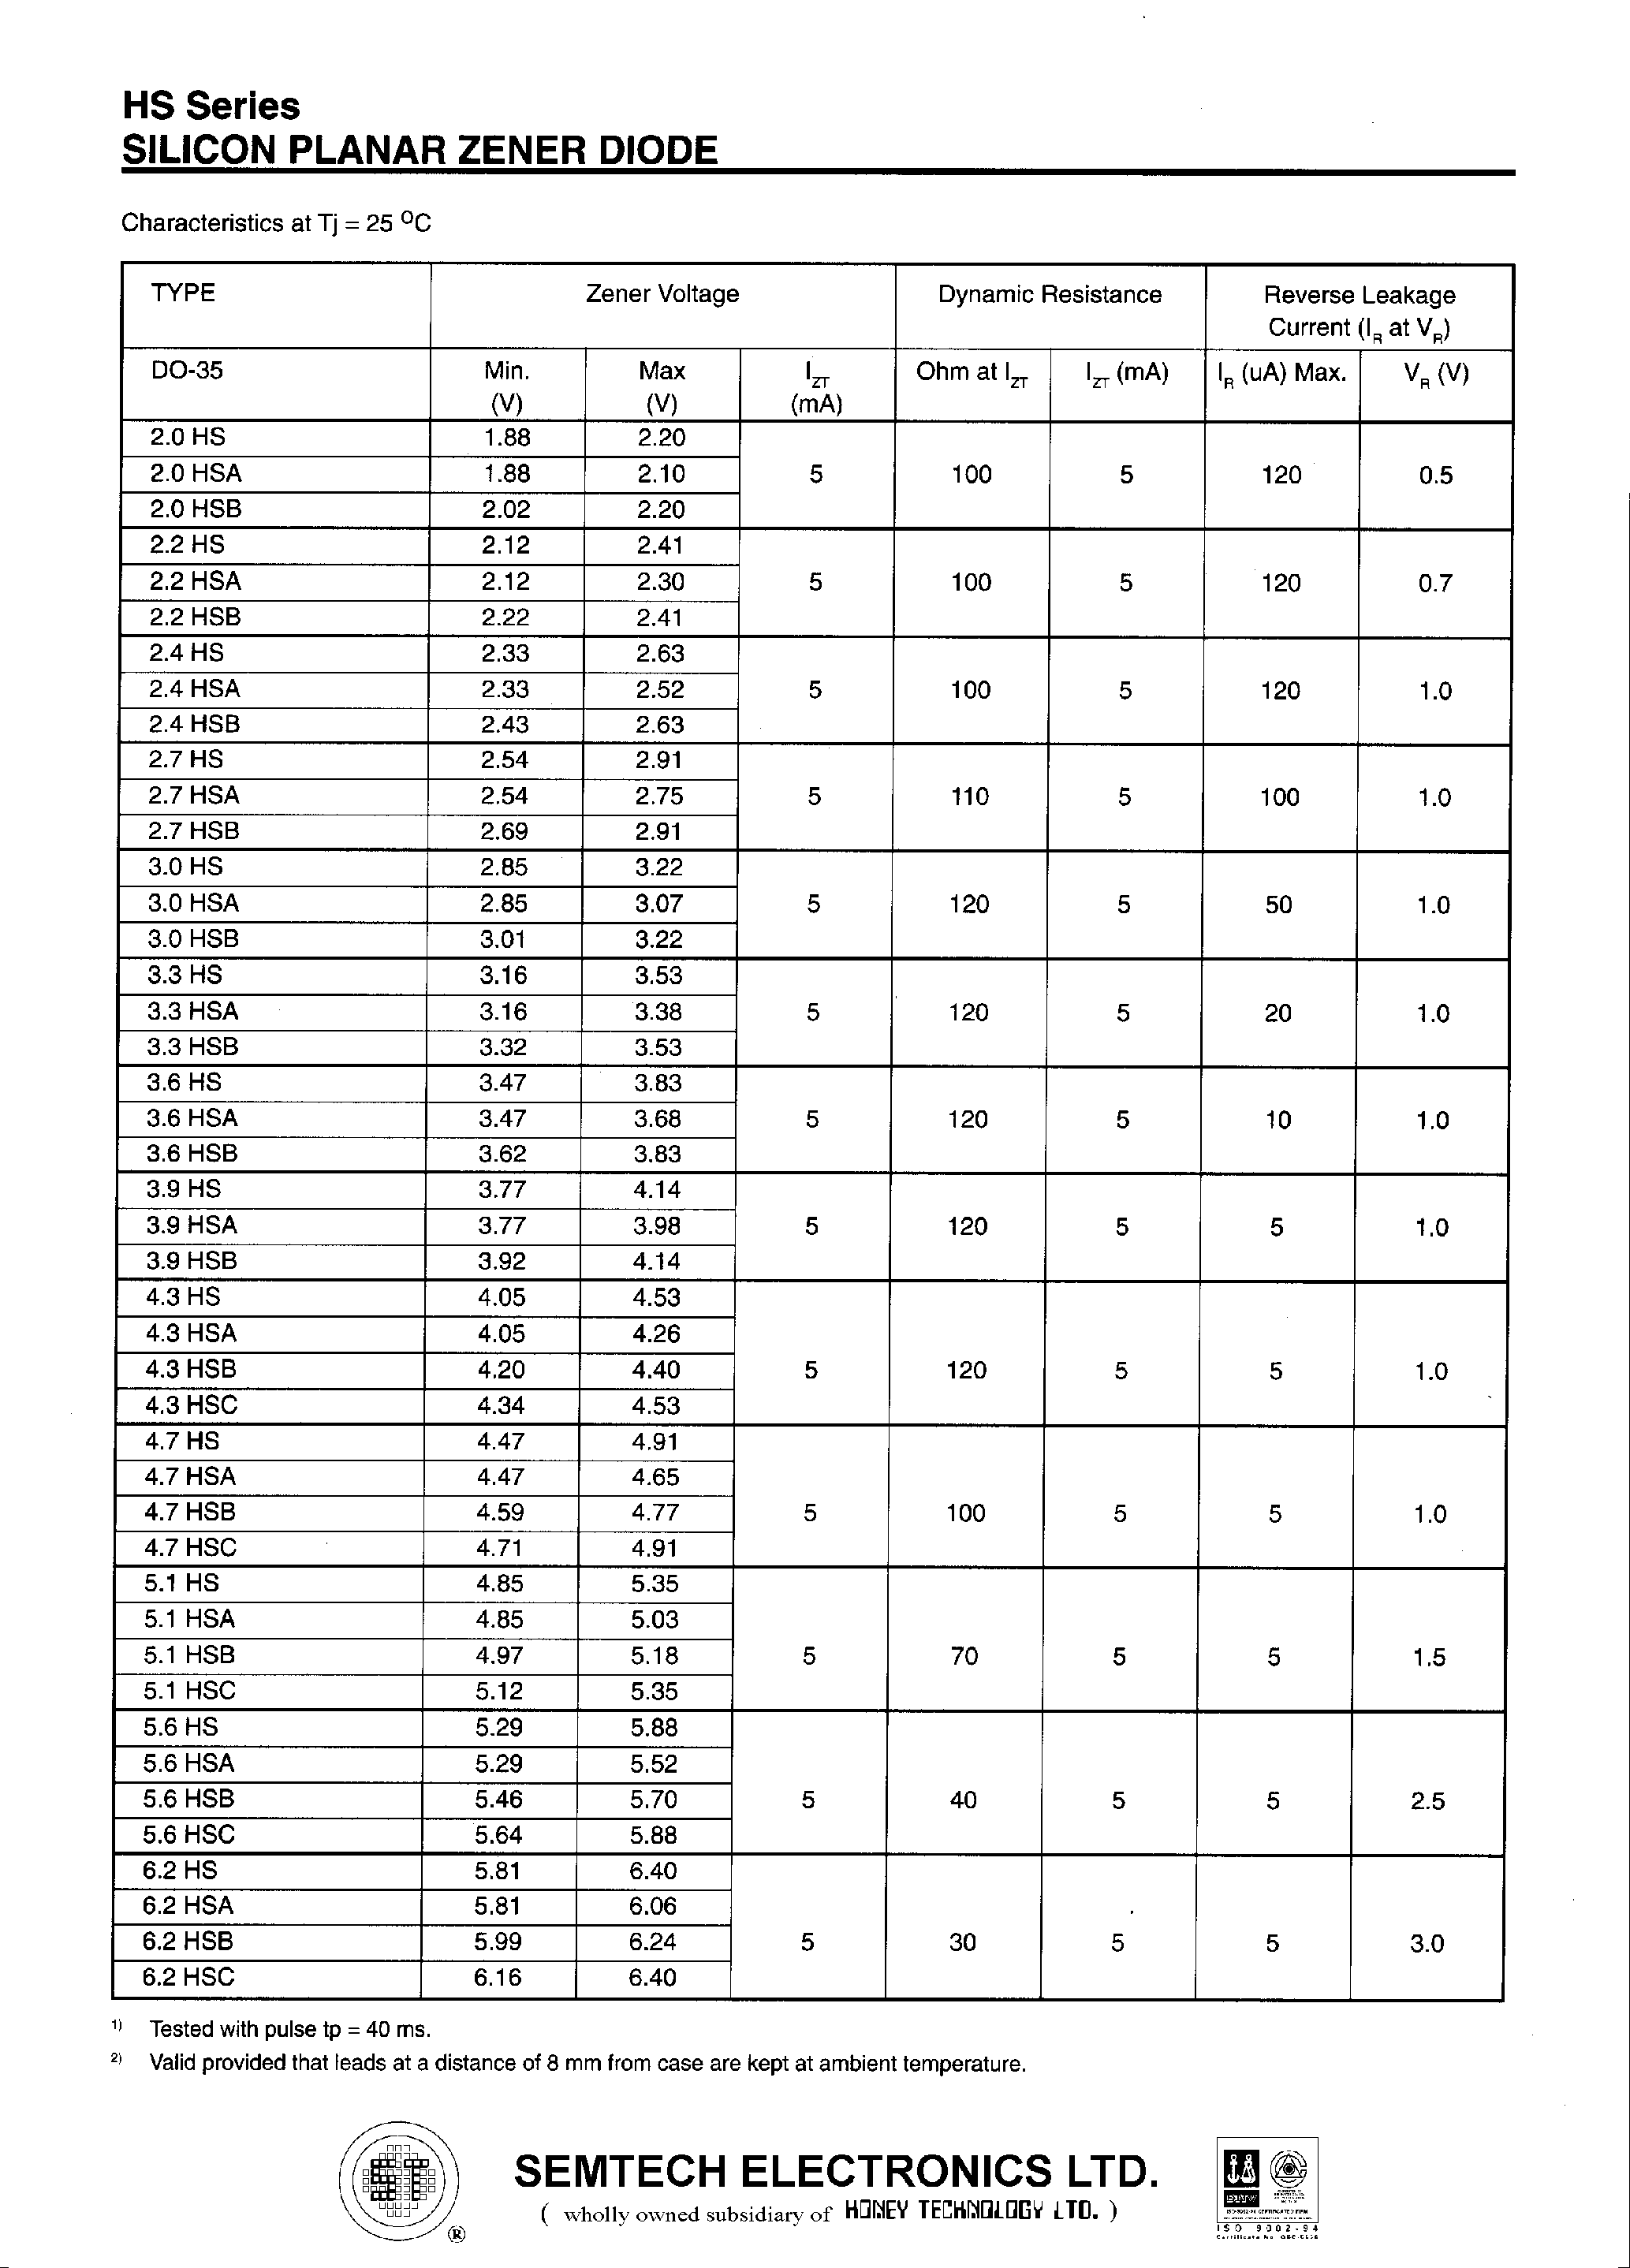 Datasheet 6.2HSC - SILICON PLANAR ZENER DIODE page 2